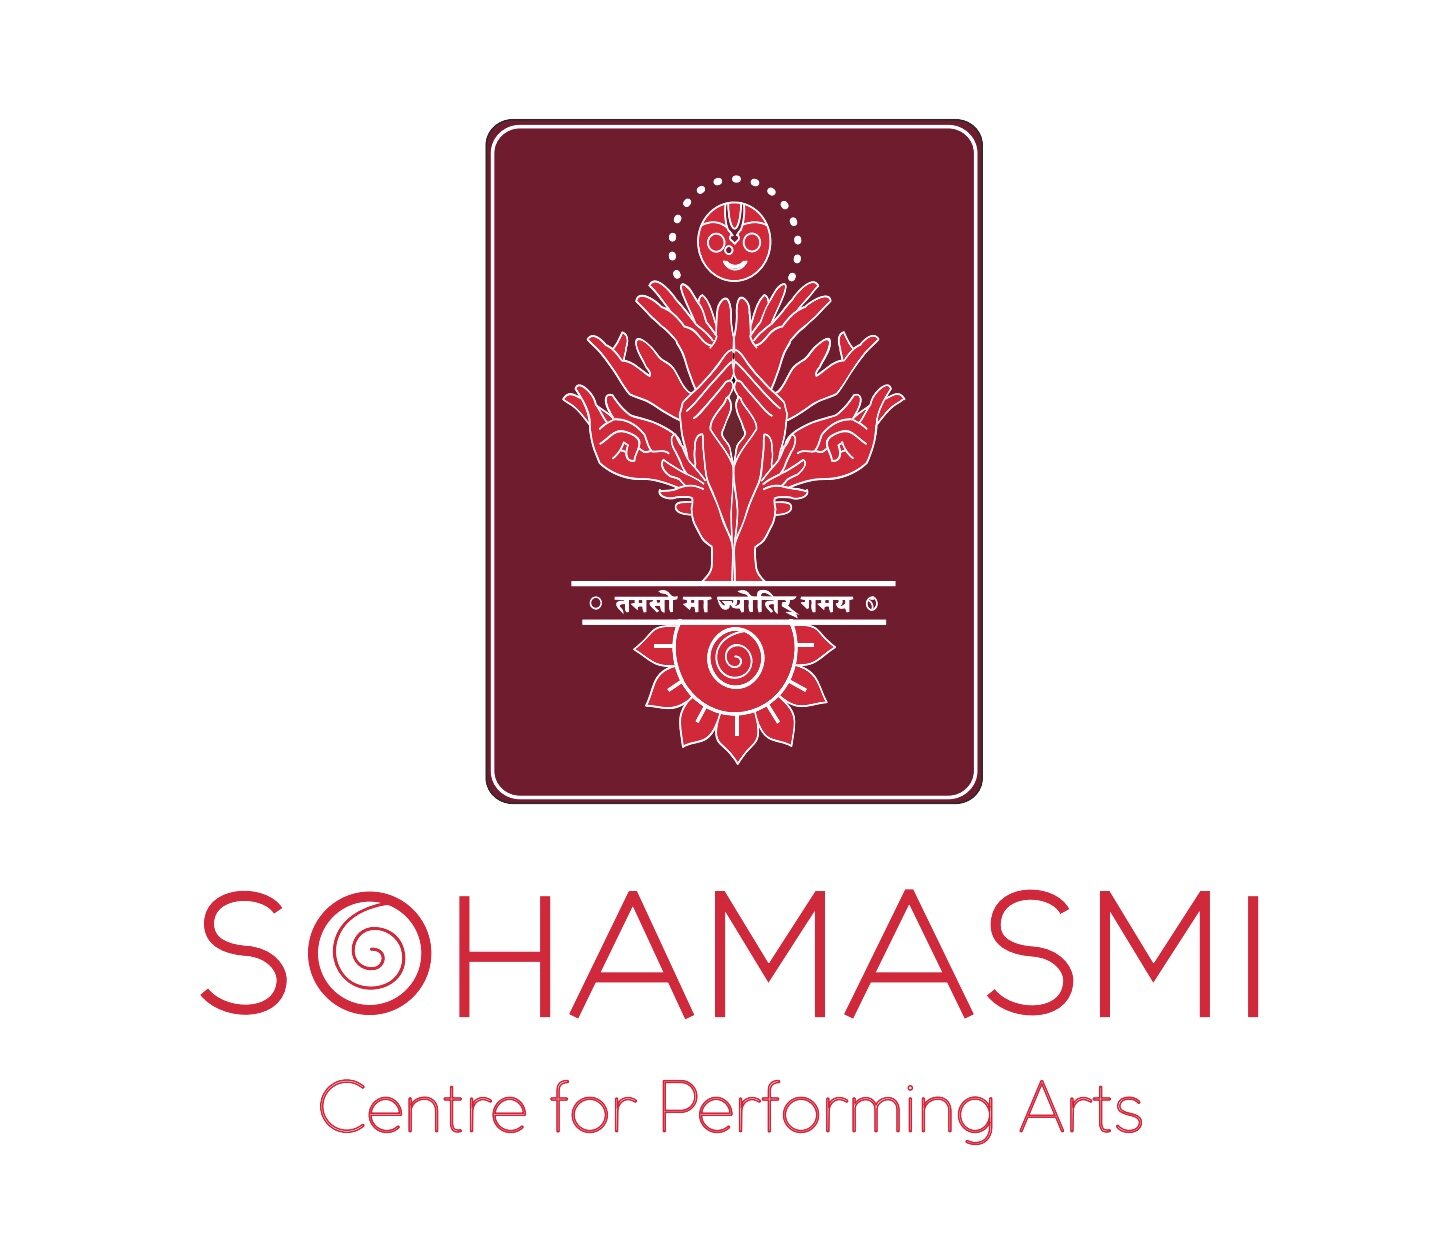 Sohamasmi Centre for Performing Arts